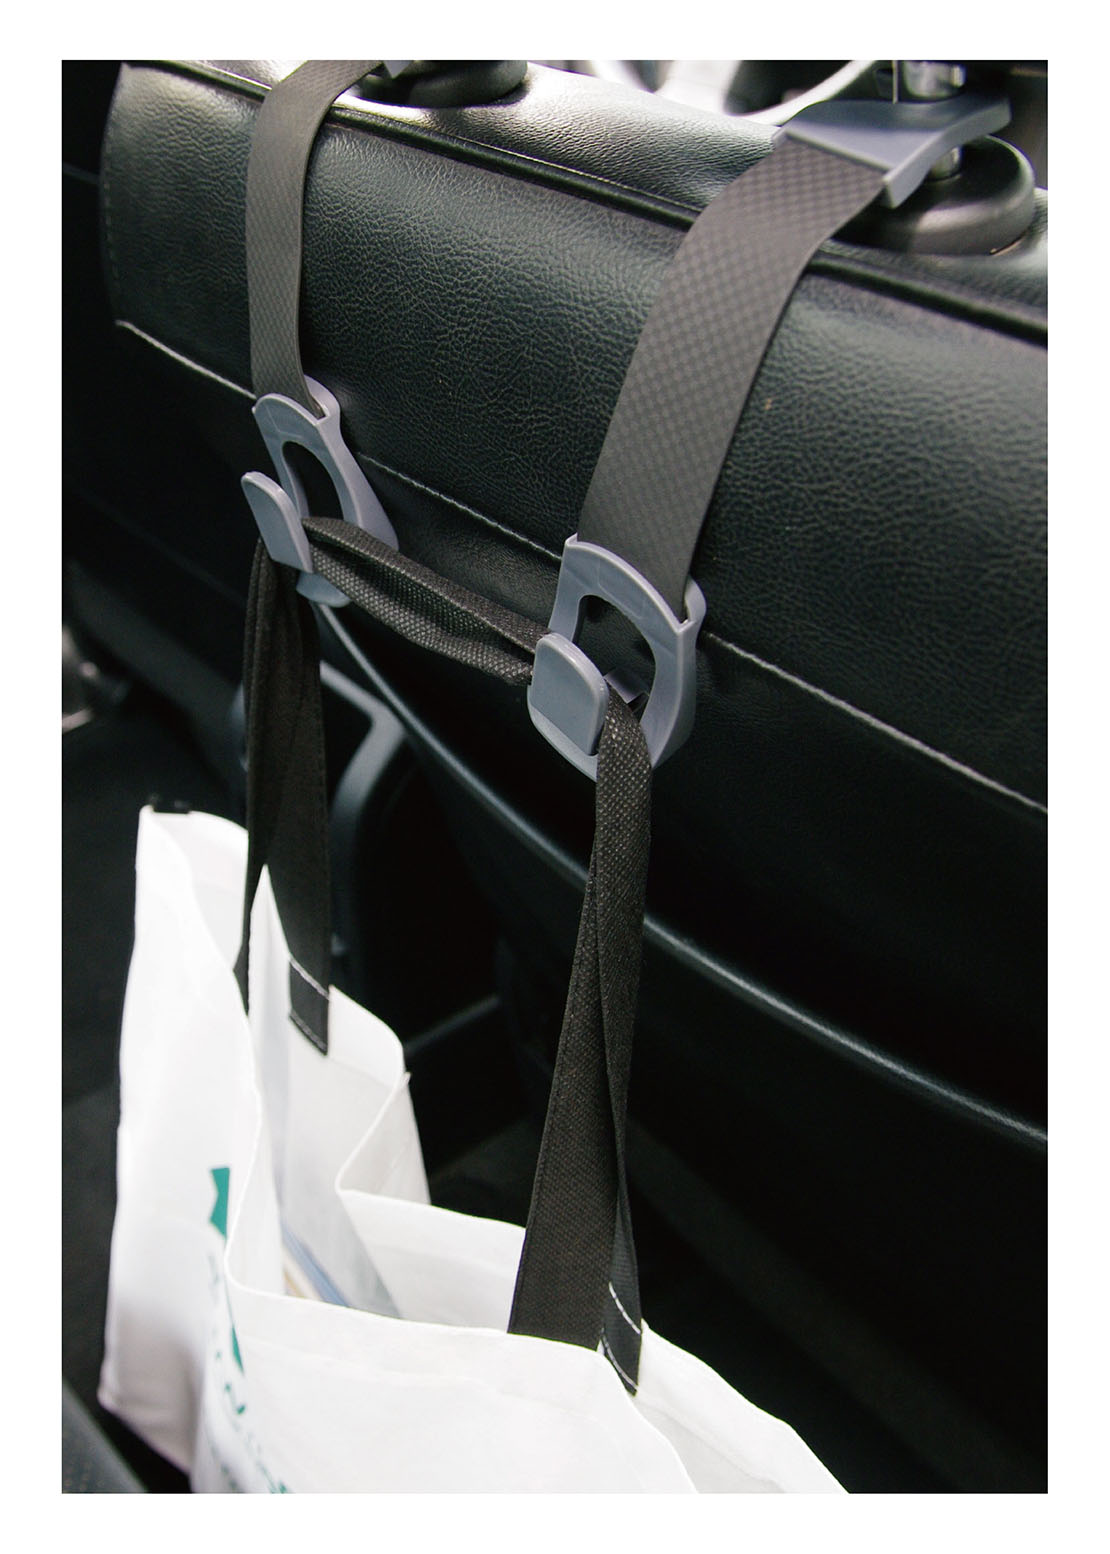 Car Headrest Organize Hooks Hangers HP3514